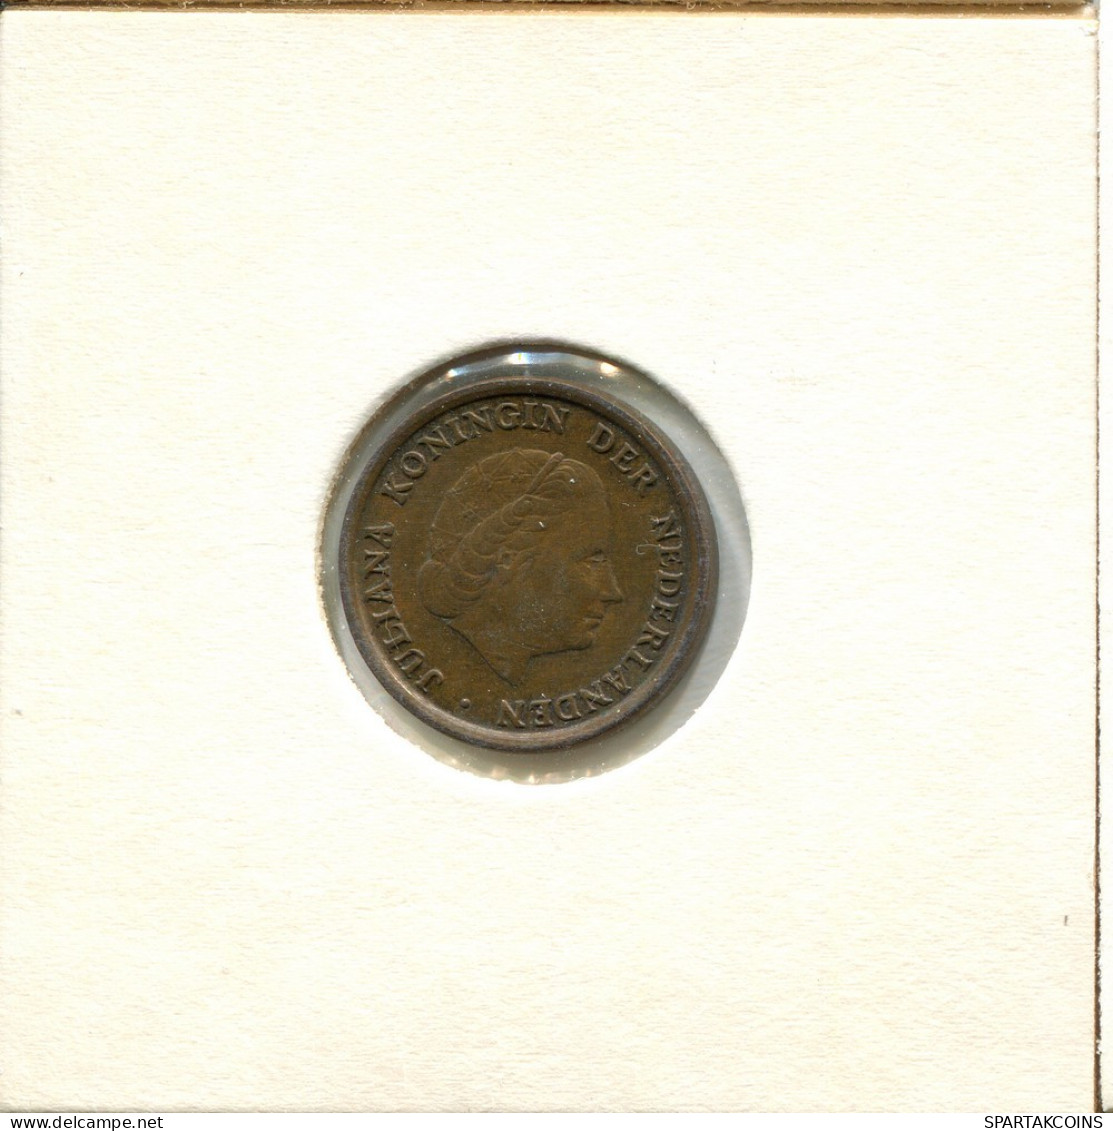 1 CENT 1971 NETHERLANDS Coin #AU449.U.A - 1948-1980 : Juliana